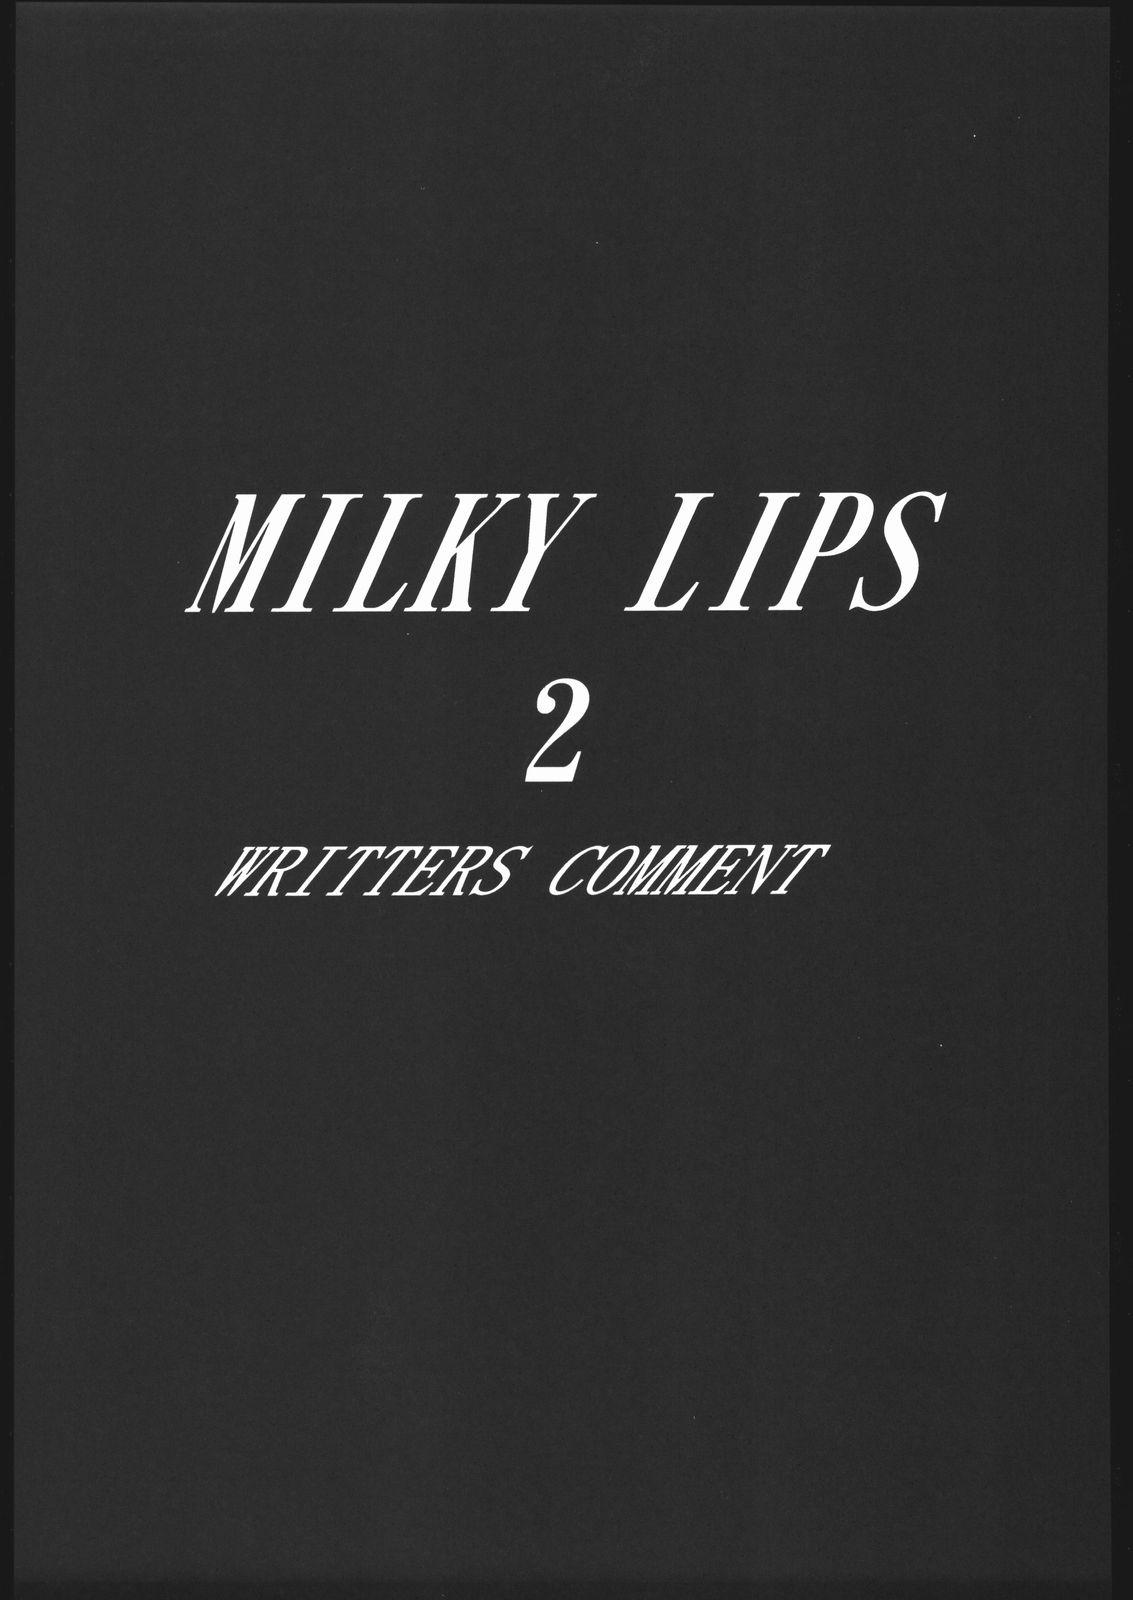 MILKY LIPS 2 53